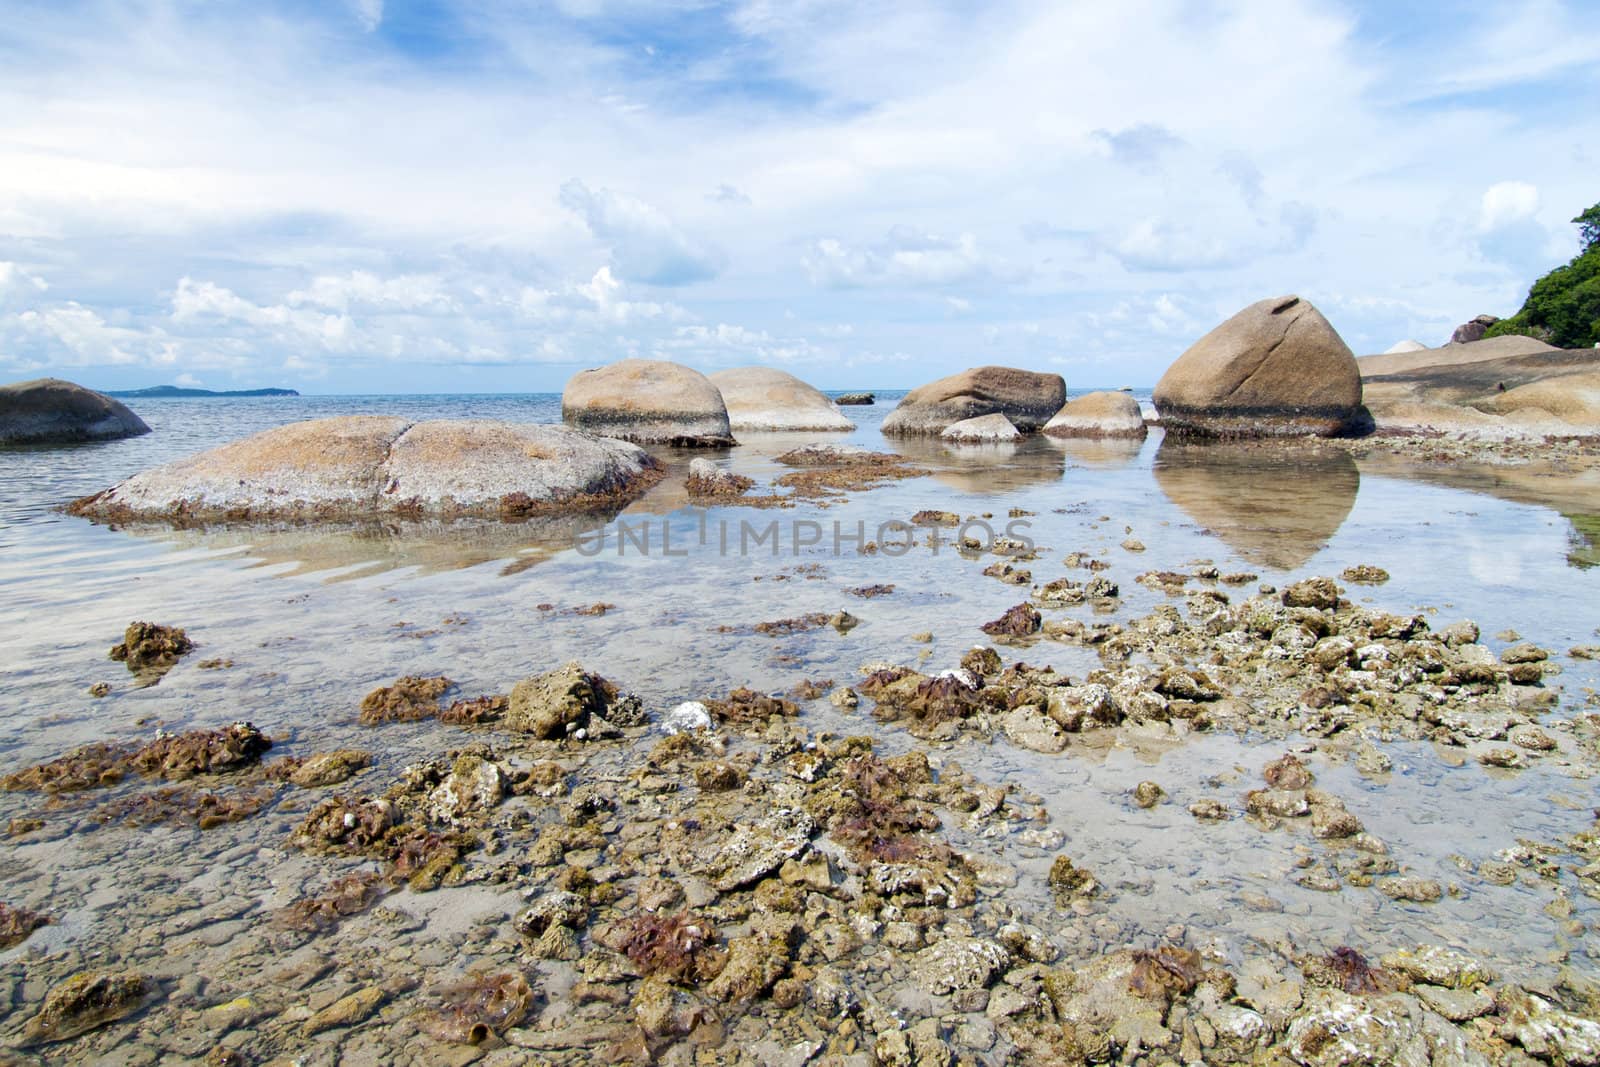 Thai island of Koh Samui. The pile of rocks on the beach by jakgree